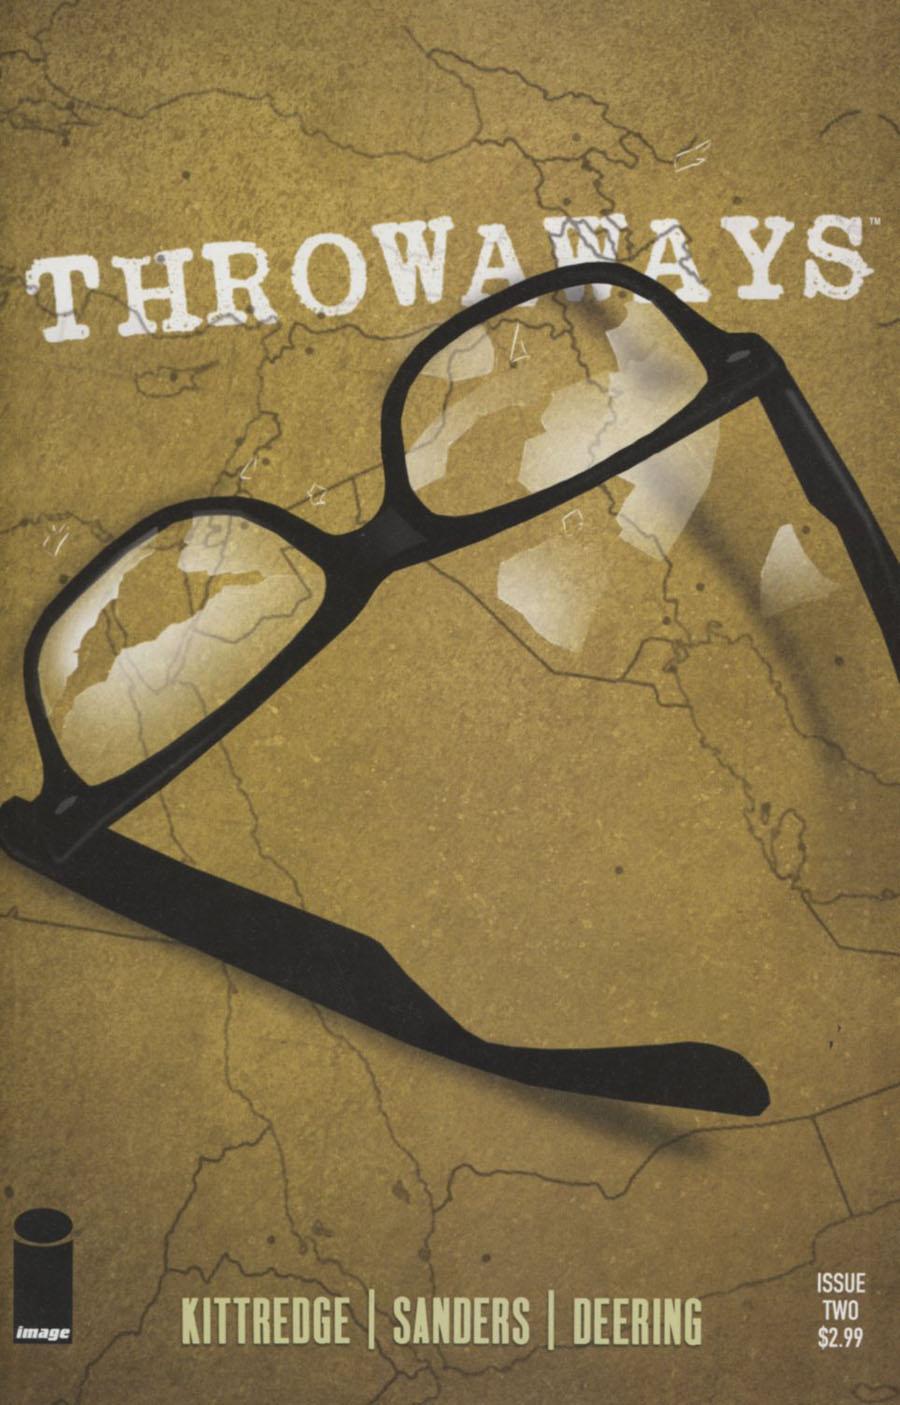 Throwaways Vol. 1 #2